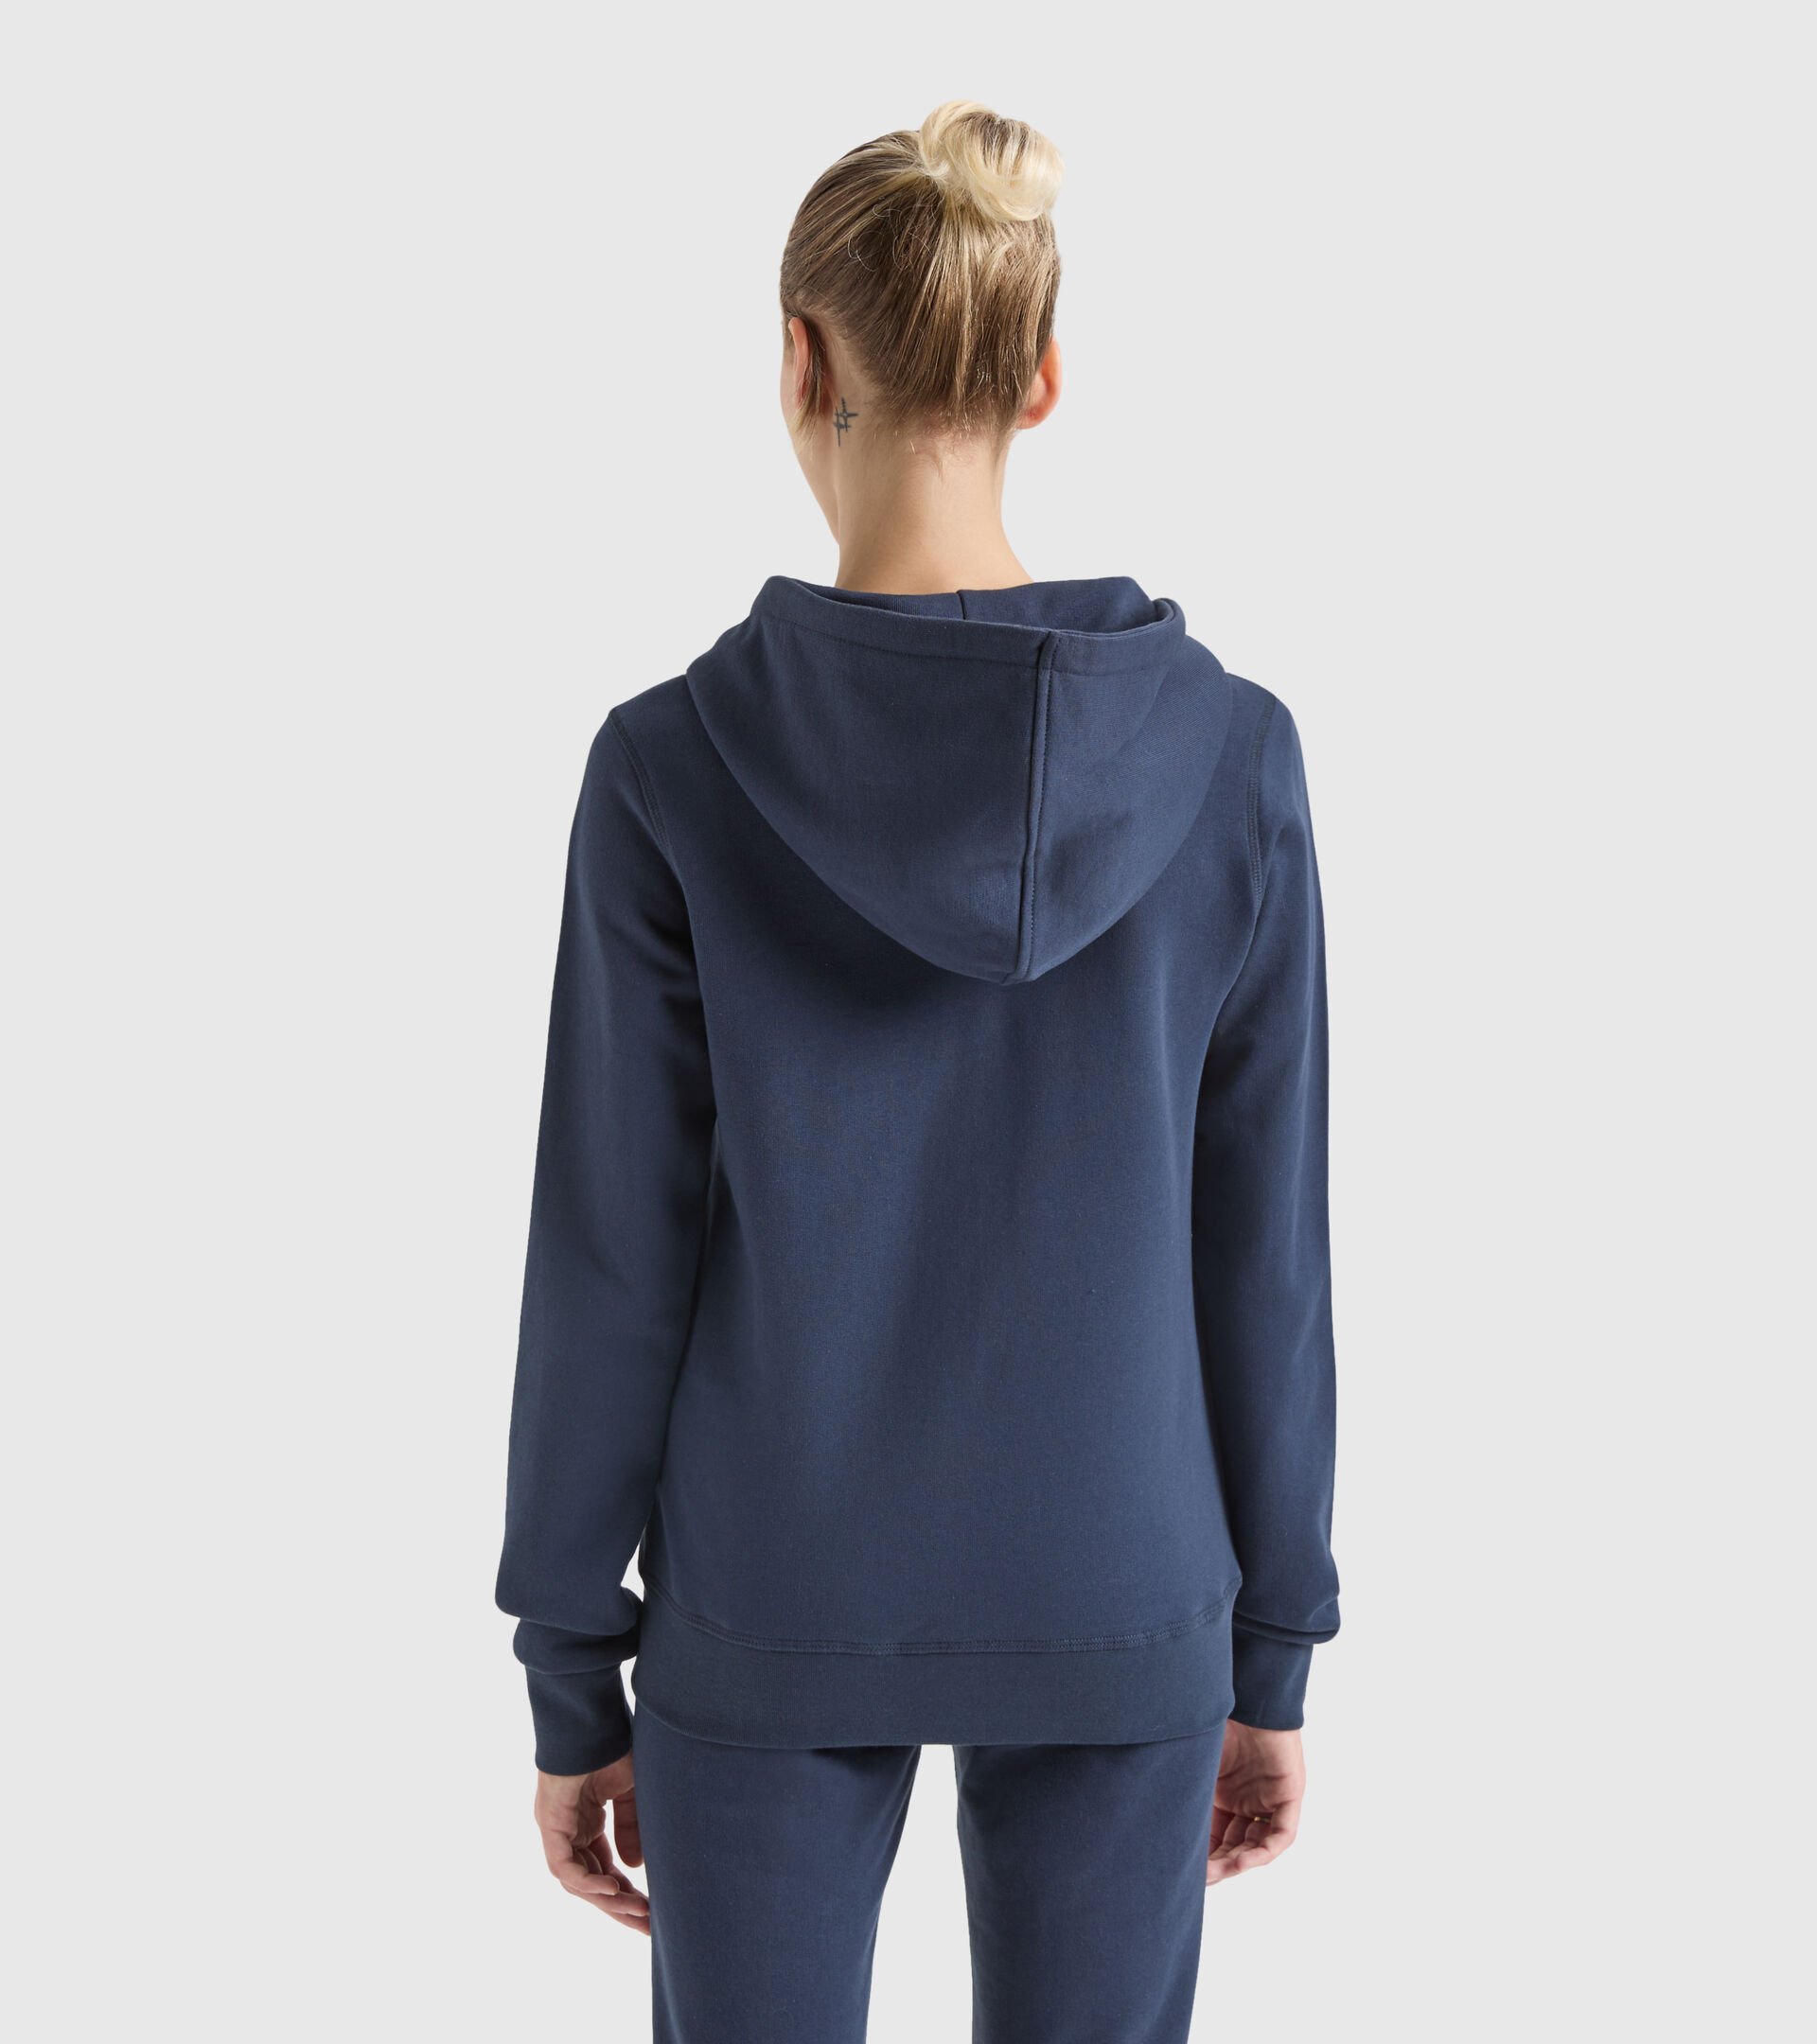 Hooded sweatshirt - Made in Italy - Women L. HOODIE FZ MII BLUE CORSAIR - Diadora